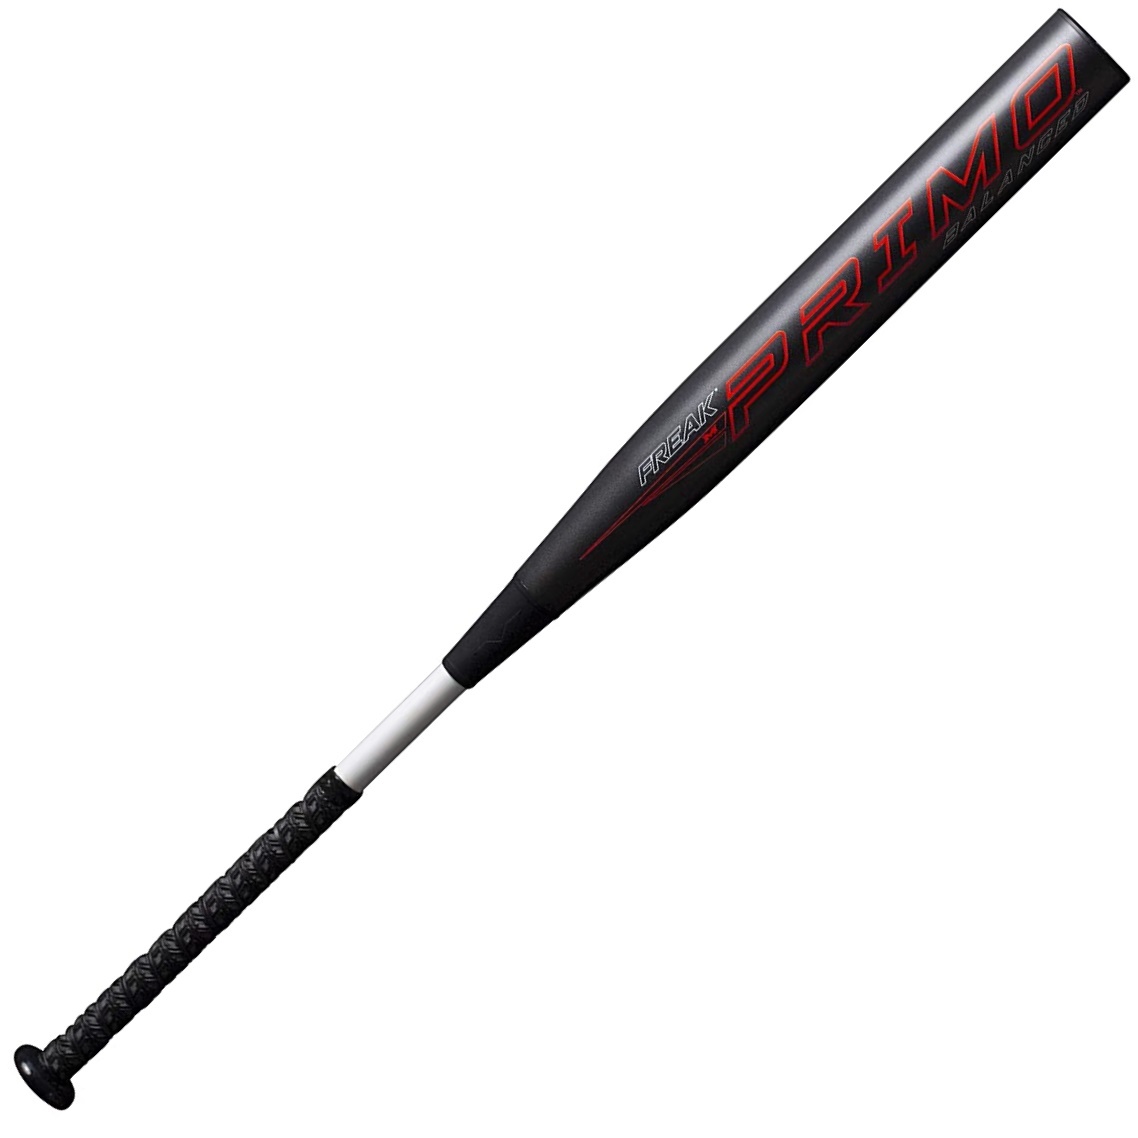 miken-freak-primo-14-usa-asa-balanced-slowpitch-softball-bat-34-inch-26-oz MP21BA-3-26 Miken  The 2021 Freak Primo balanced USA bat offers a superior feel